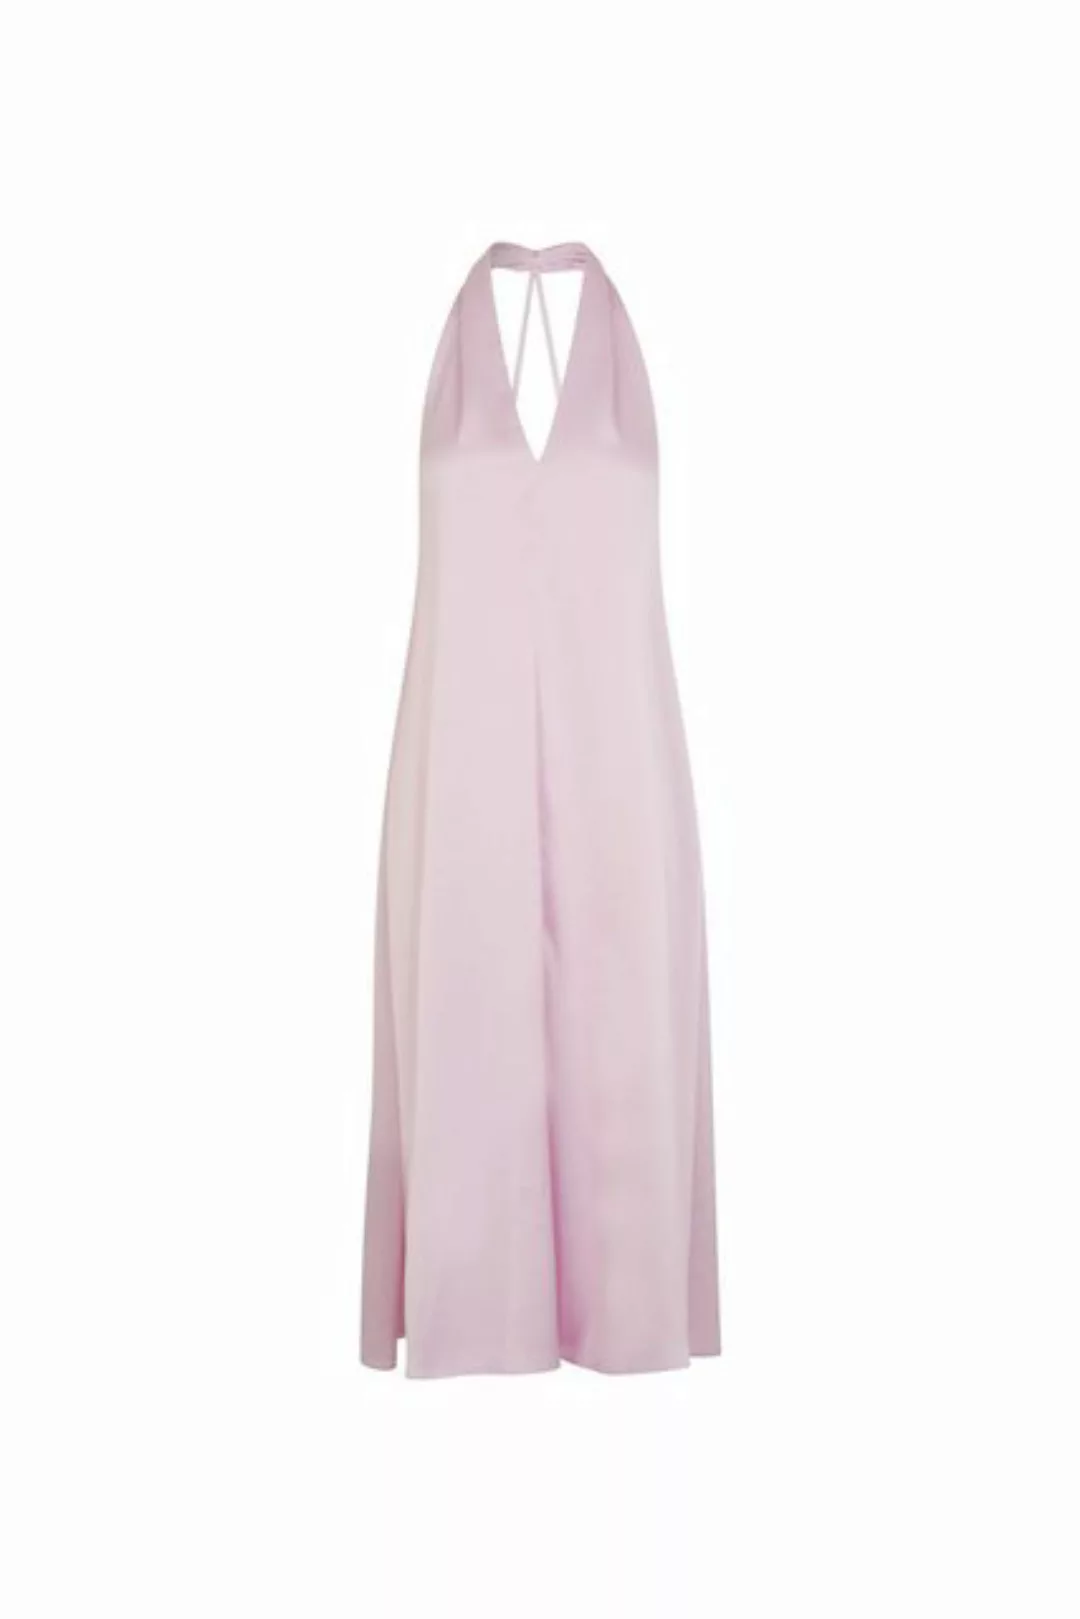 Samsoe & Samsoe Midikleid Sacille dress 12959 günstig online kaufen